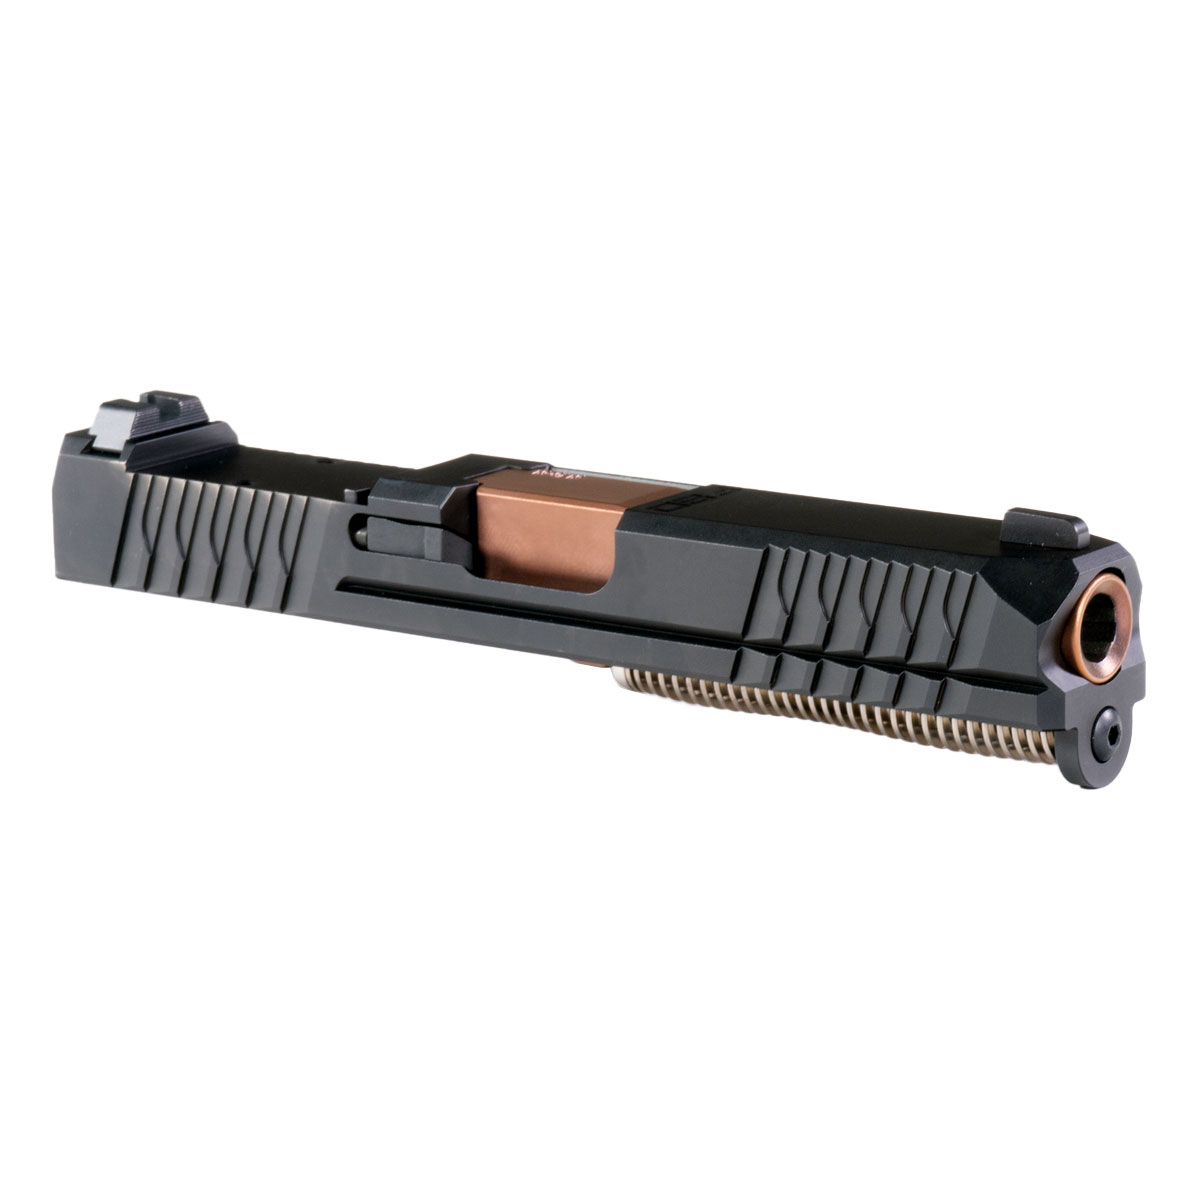 DTT 'Velareon' 9mm Complete Slide Kit - Glock 19 Gen 1-3 Compatible